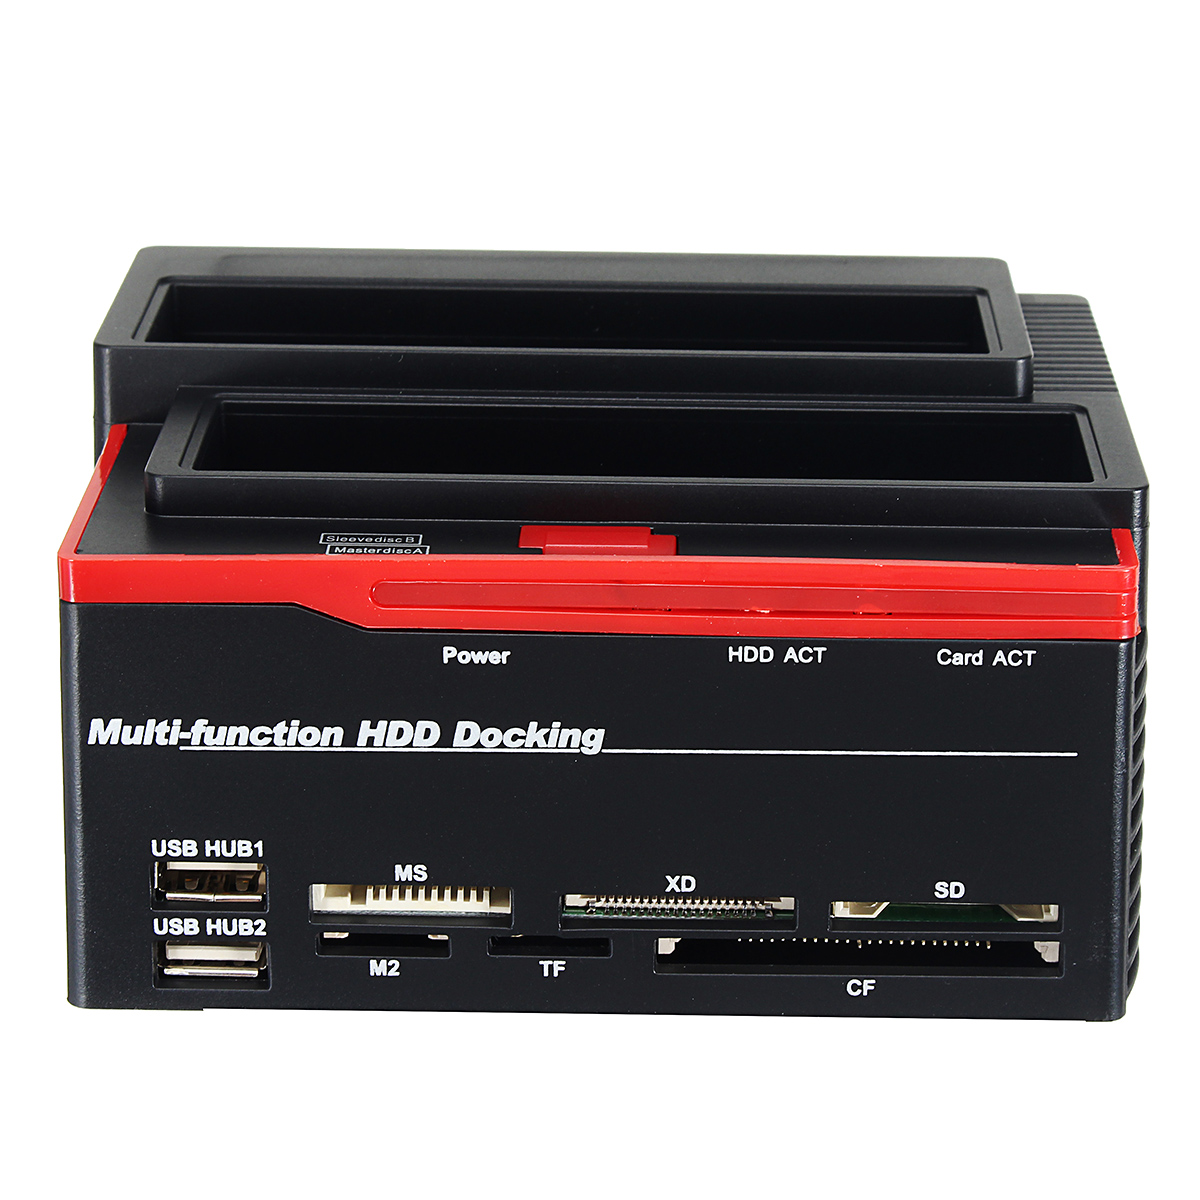 2535quot-SATA-IDE-HDD-Docking-Station-Offline-Clone-Hard-Drive-Enclosure-USB20-HUB-Card-Reader-US-1345996